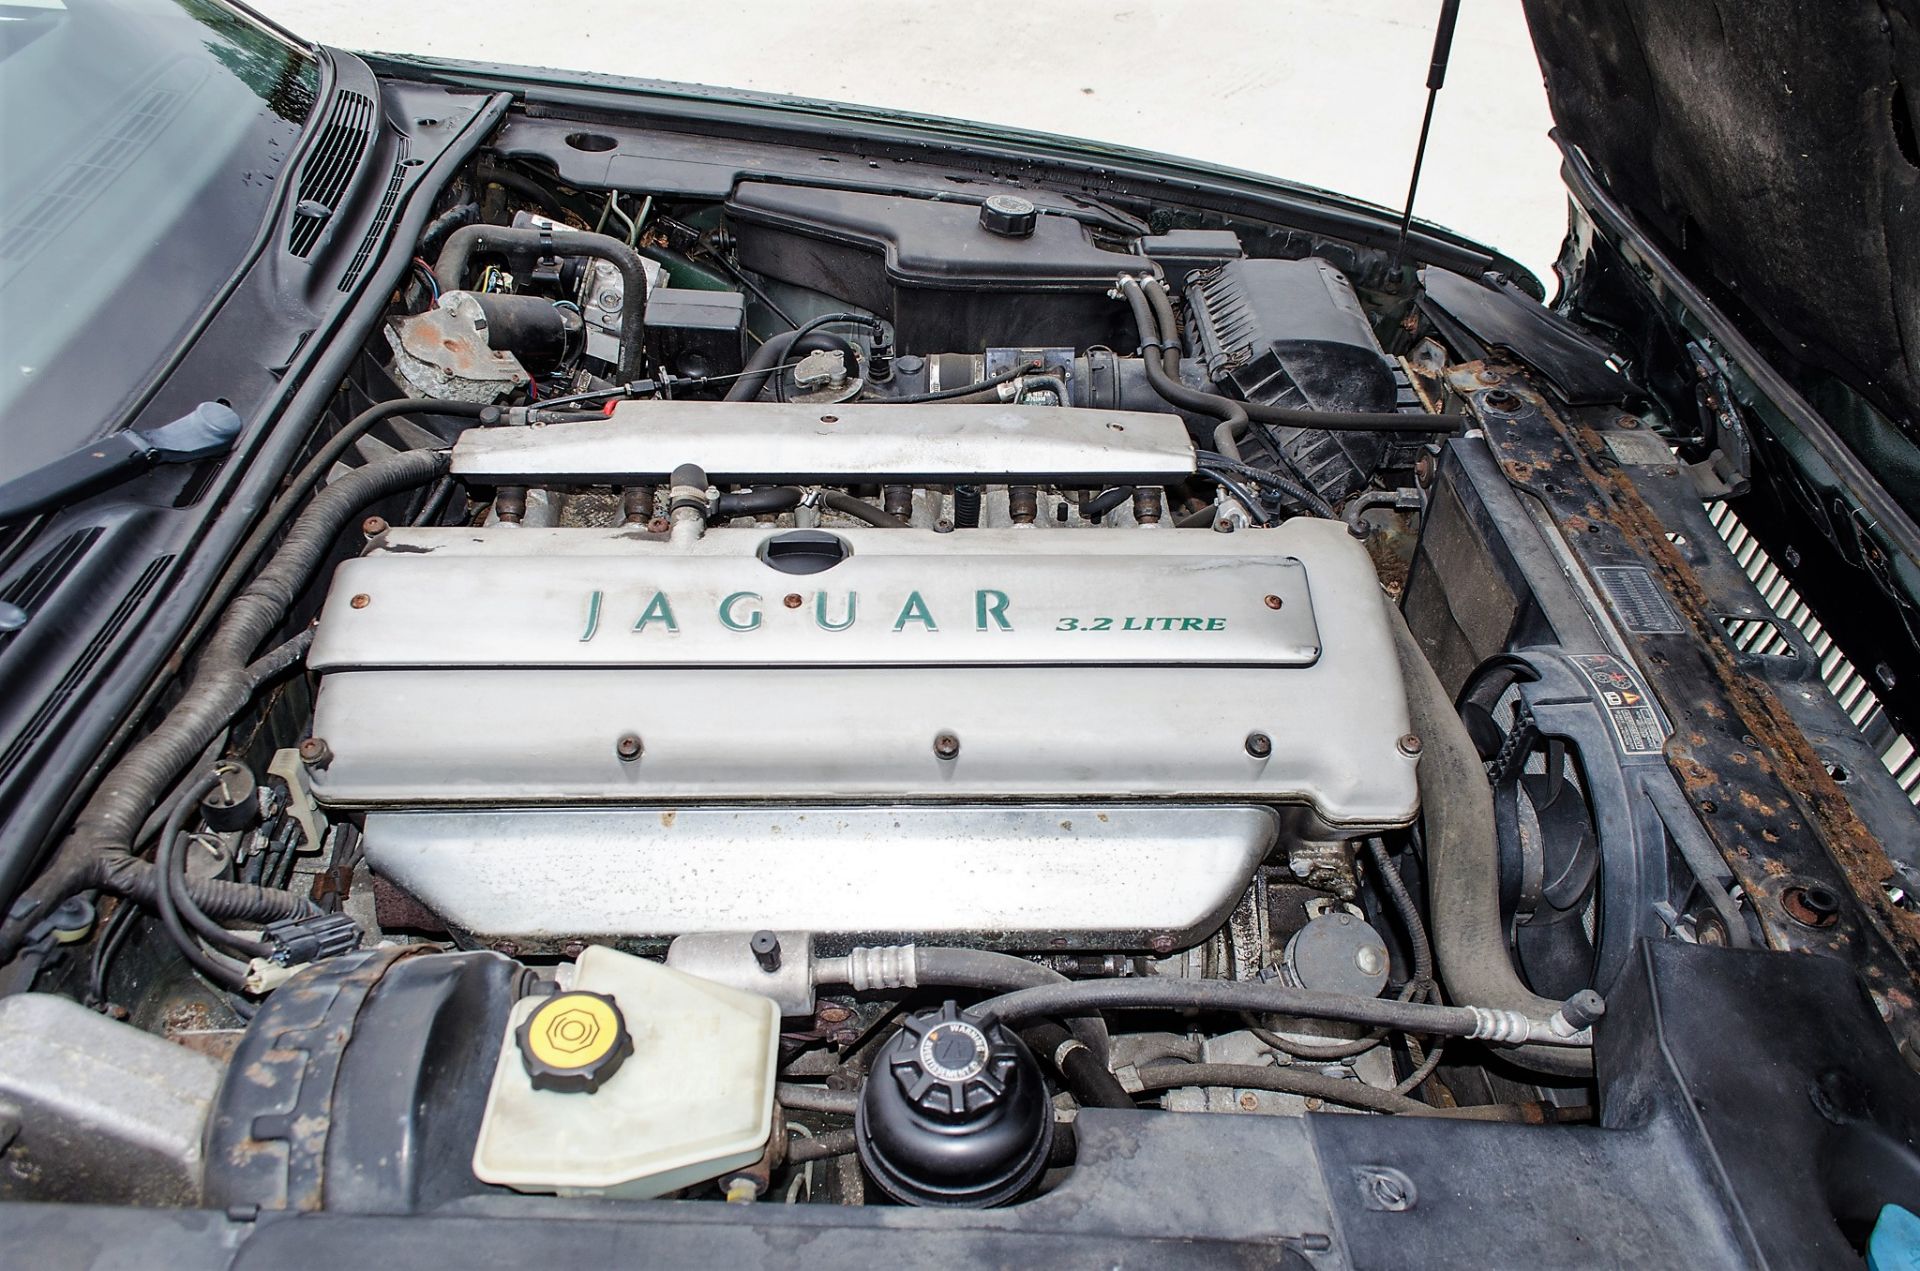 Jaguar XJ6 3.2 Sport petrol automatic 4 door saloon car Registration Number: N586 HUY Date of - Image 27 of 28